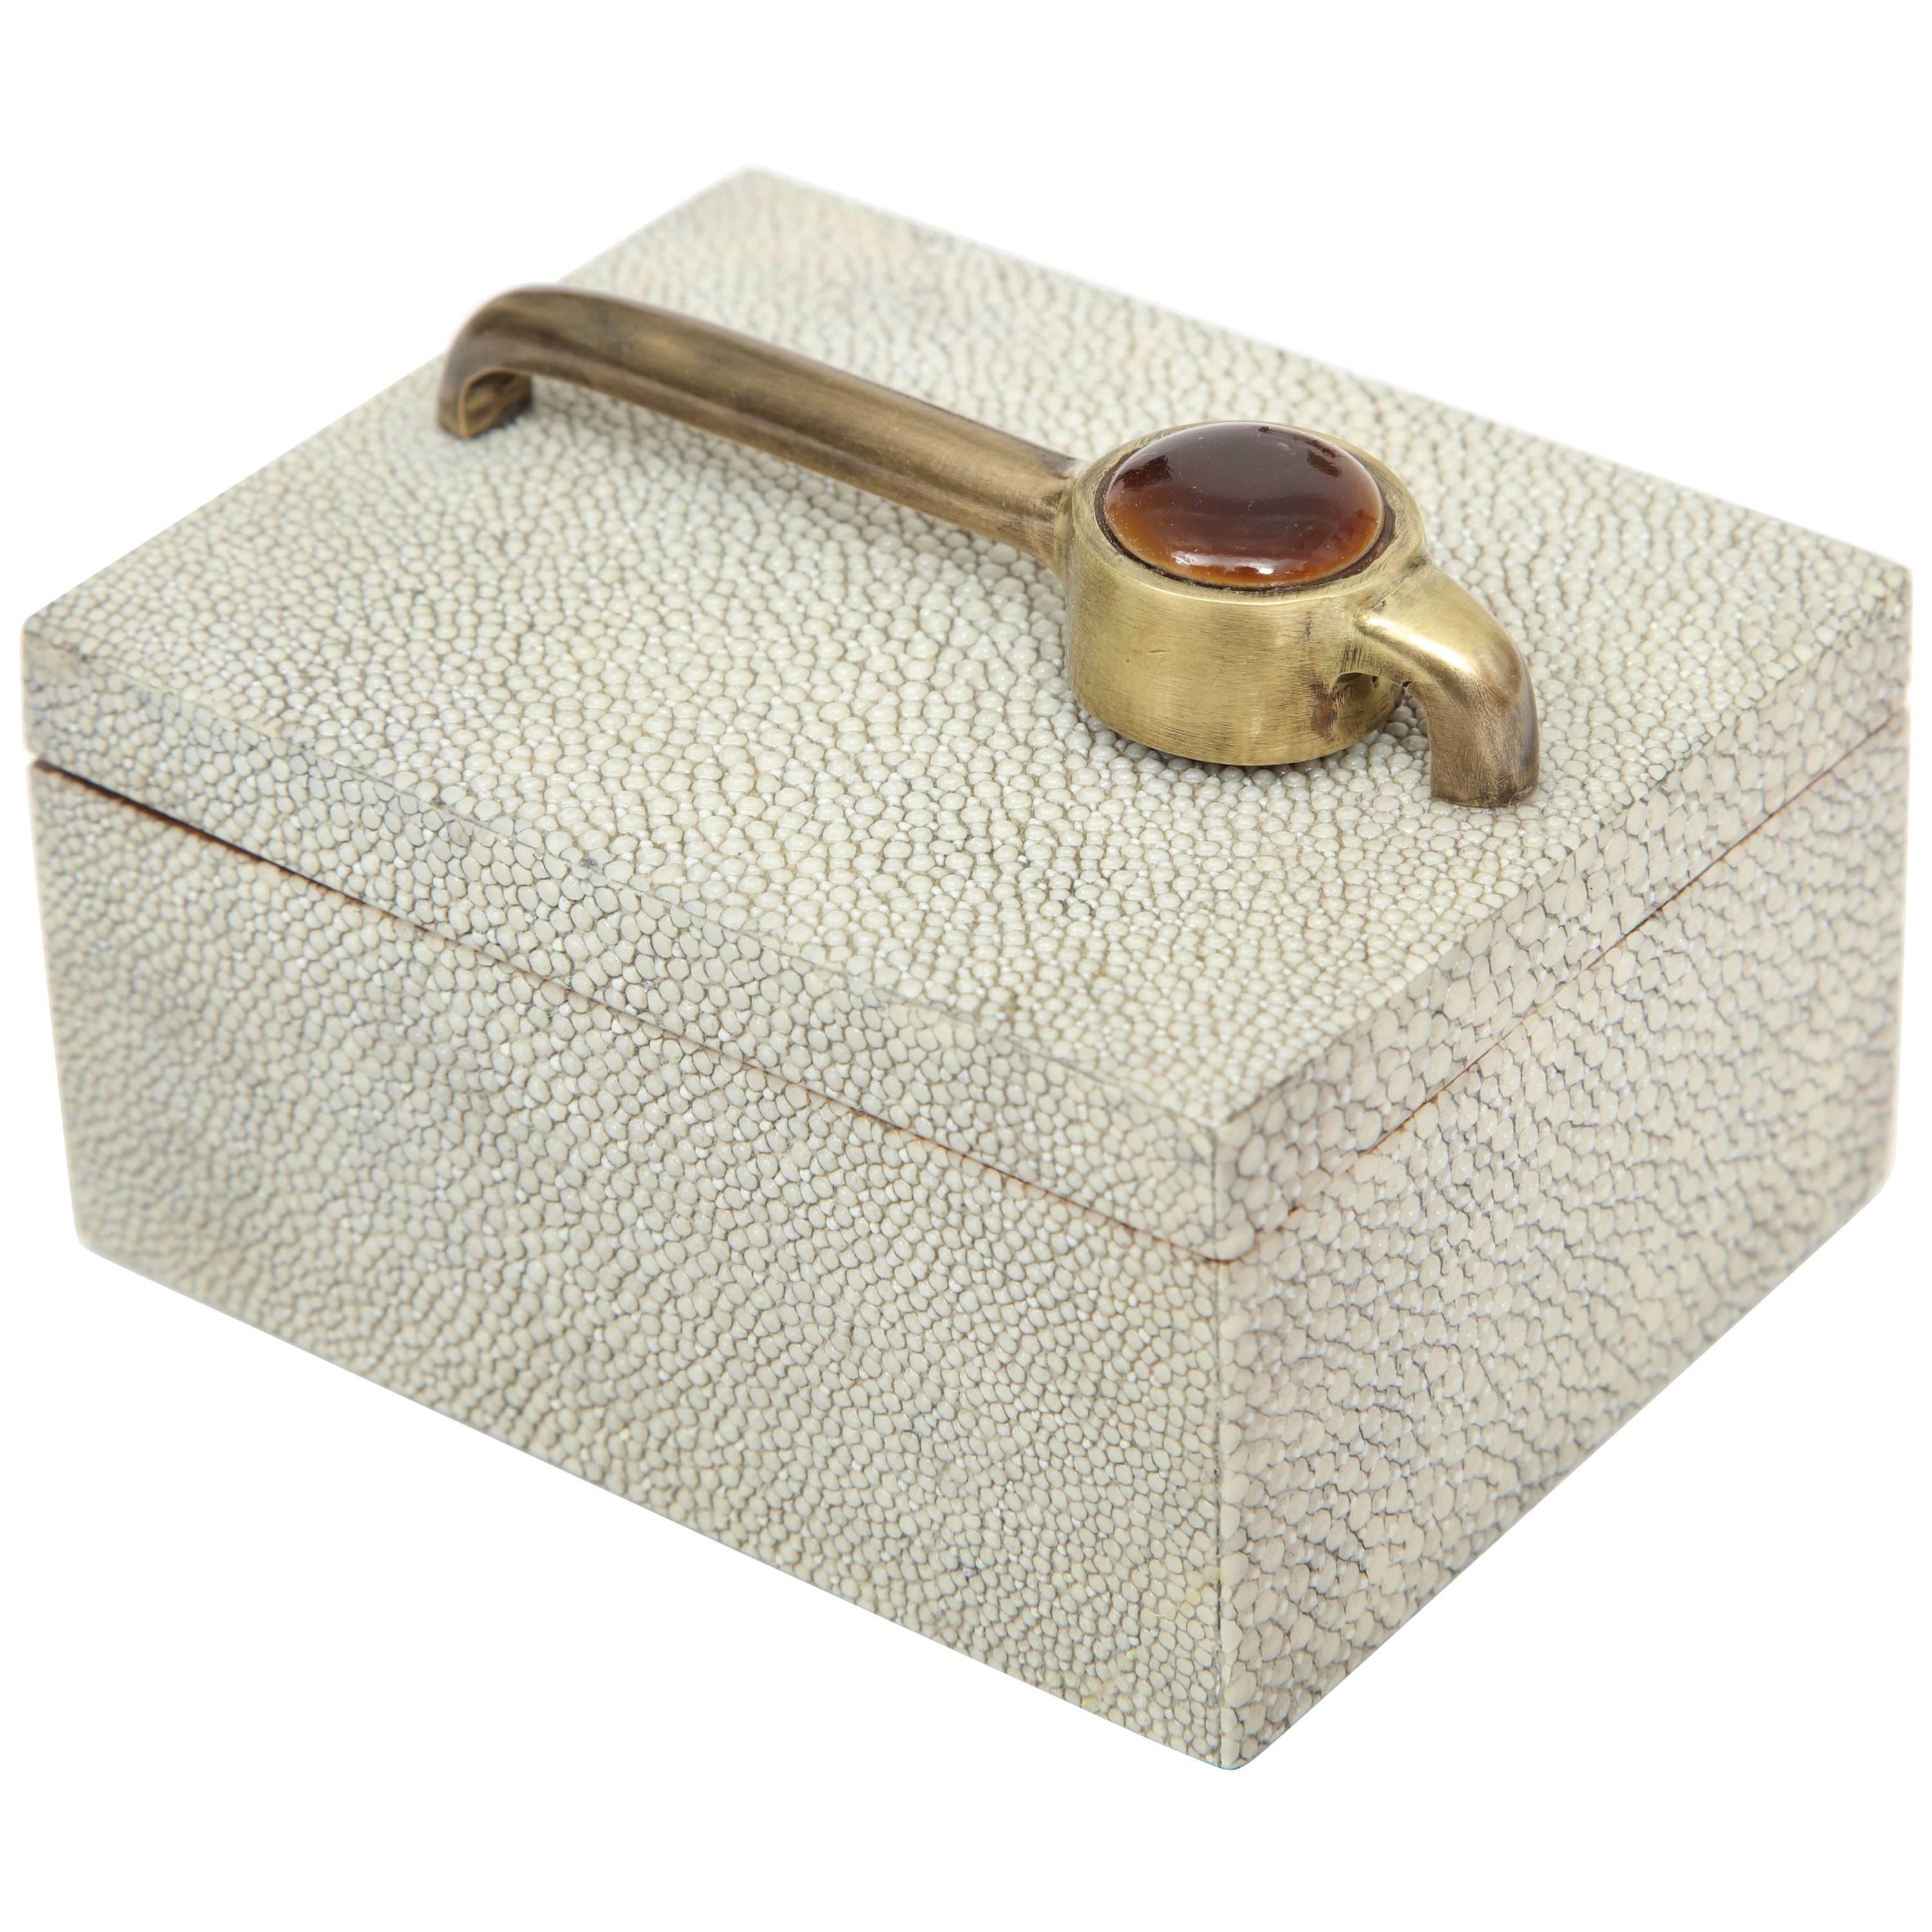 Box, Shagreen with Bronze Details